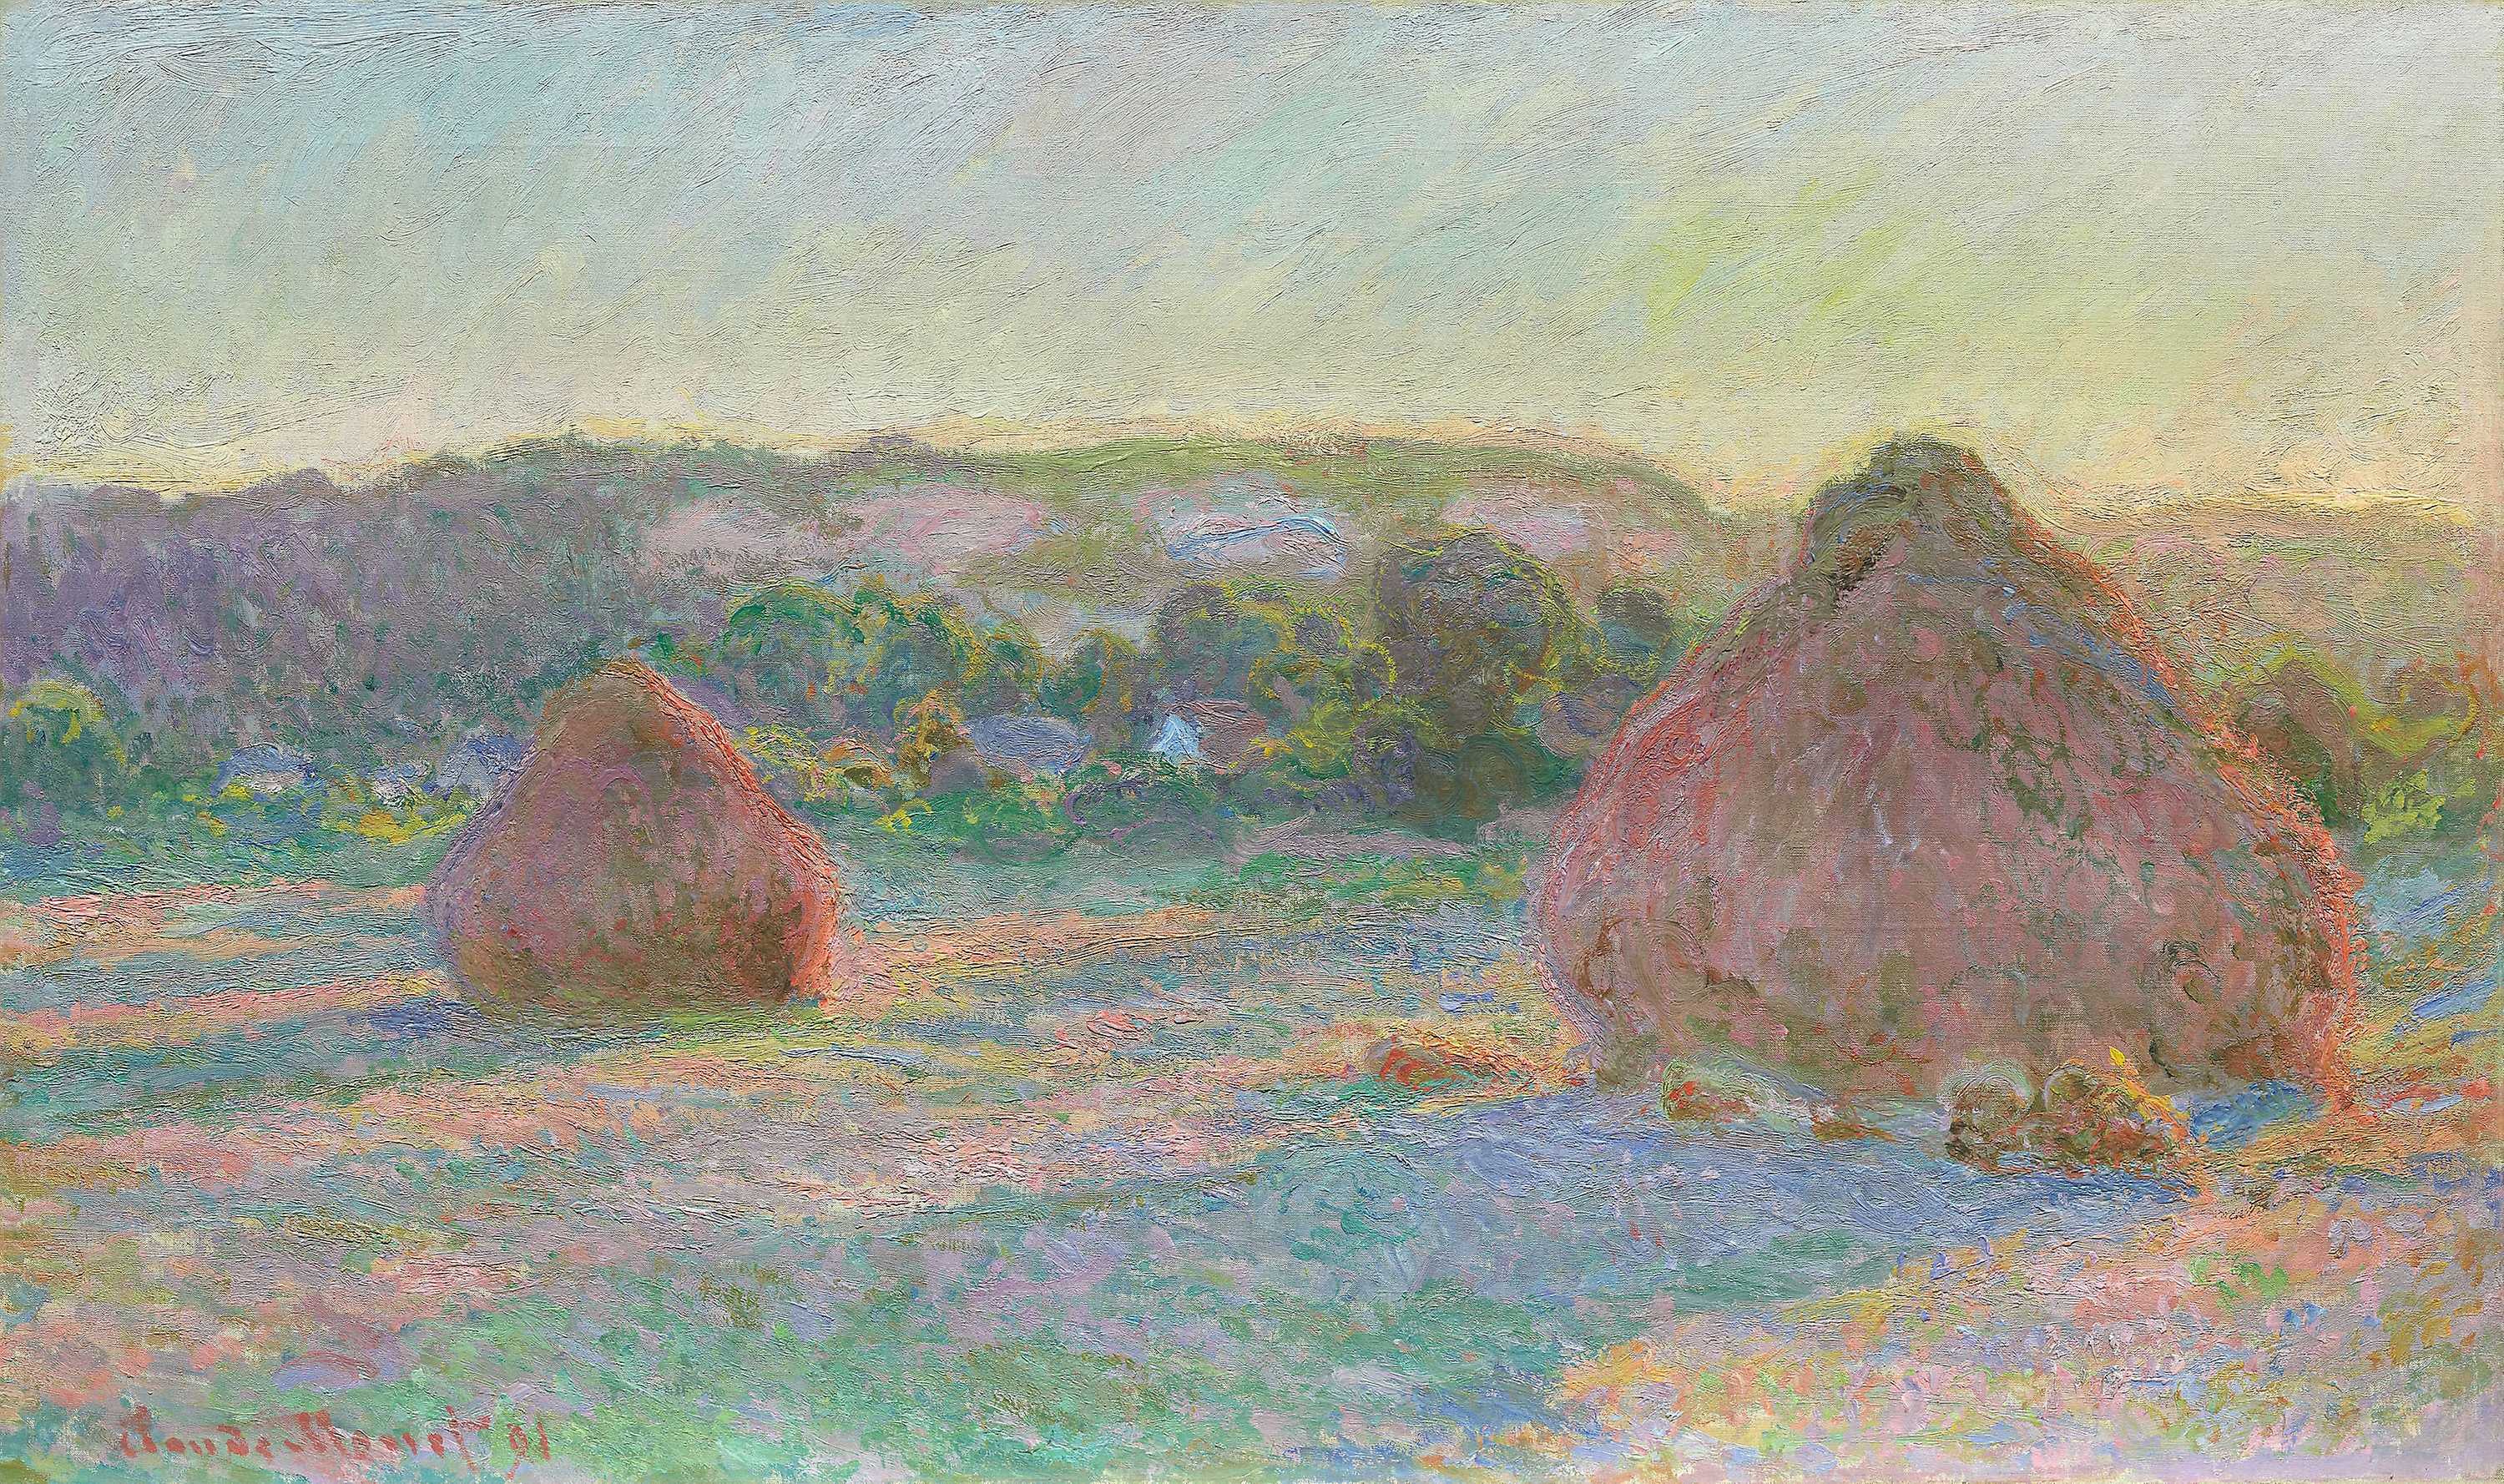 Buğday Yığınları (Yaz Sonu) (orig. "Stacks of Wheat (End of Summer)") by Claude Monet - 1891 - 60 x 100.5 cm Art Institute of Chicago